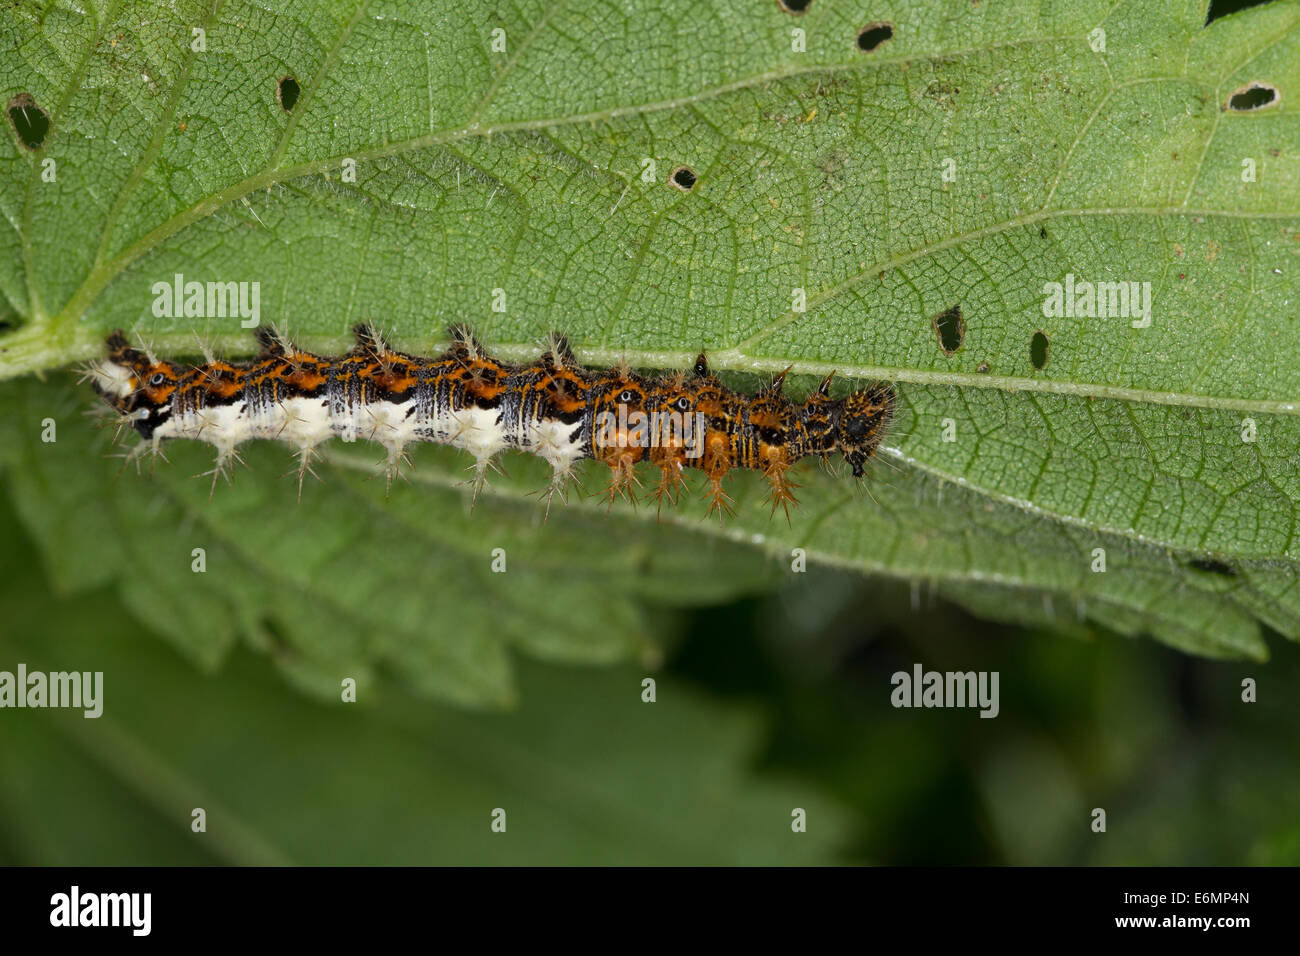 Comma, caterpillar eats stinging nettle, C-Falter, Weißes C, Raupe frisst Brennnessel, Polygonia c-album, Nymphalis c-album Stock Photo